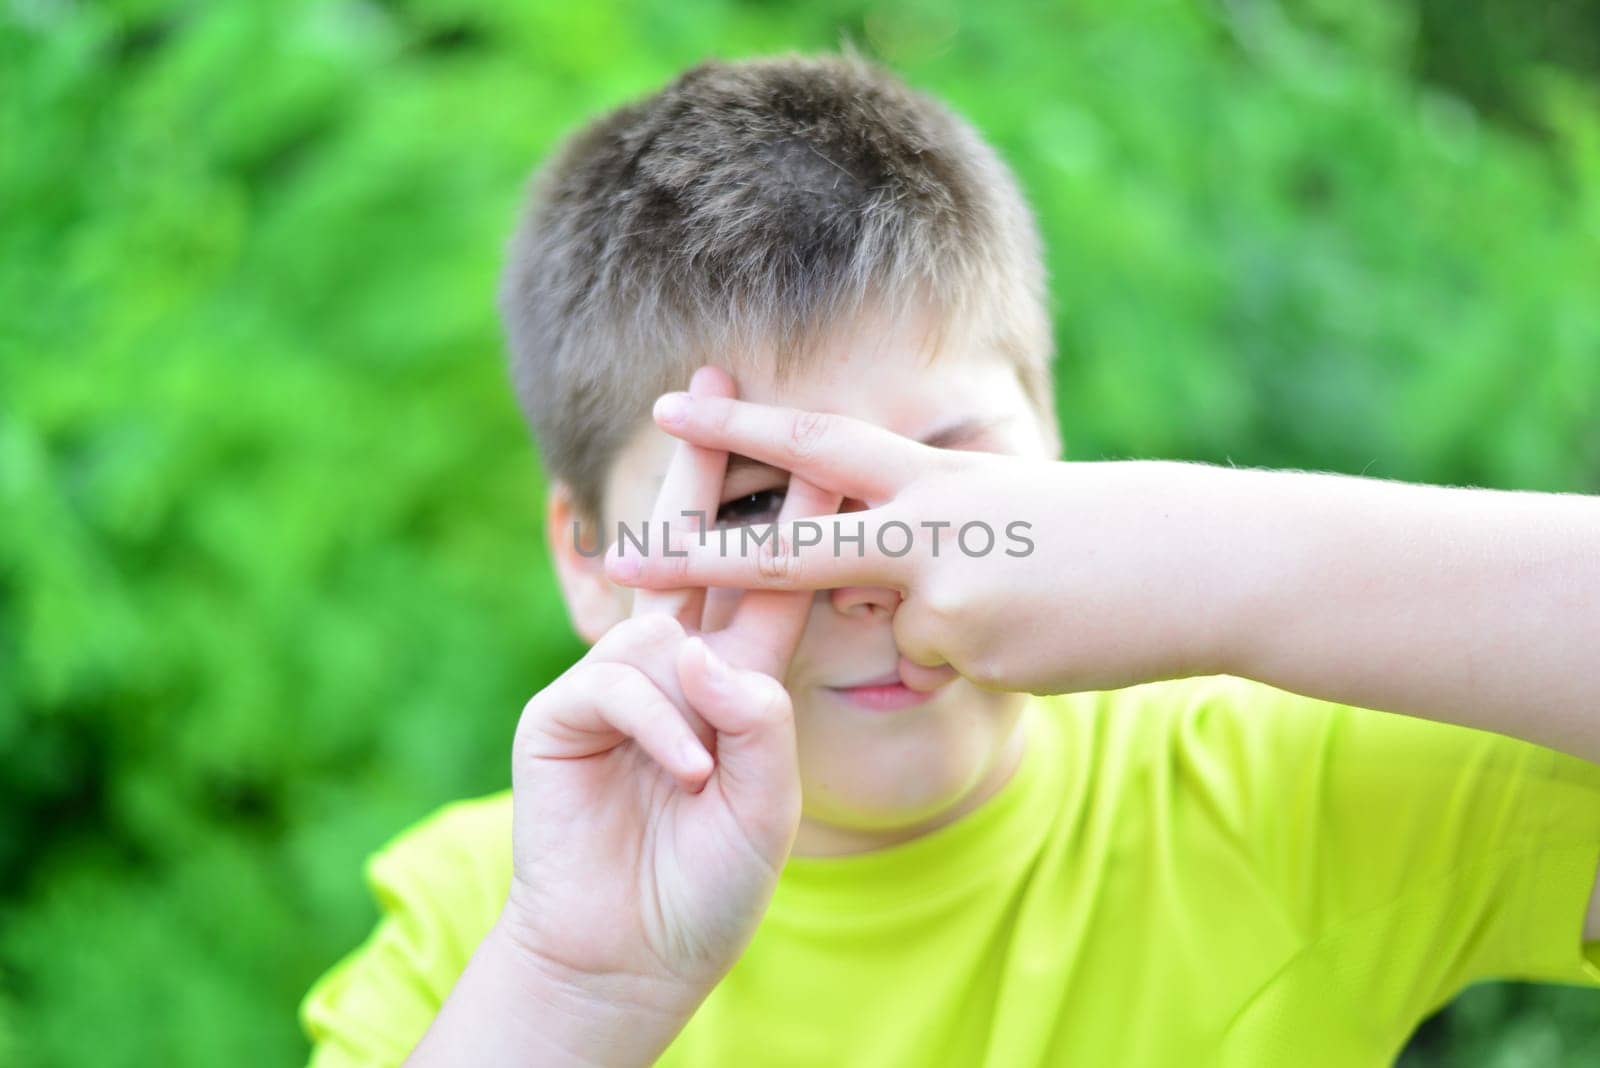 A Boy shows sign gesture prison bars